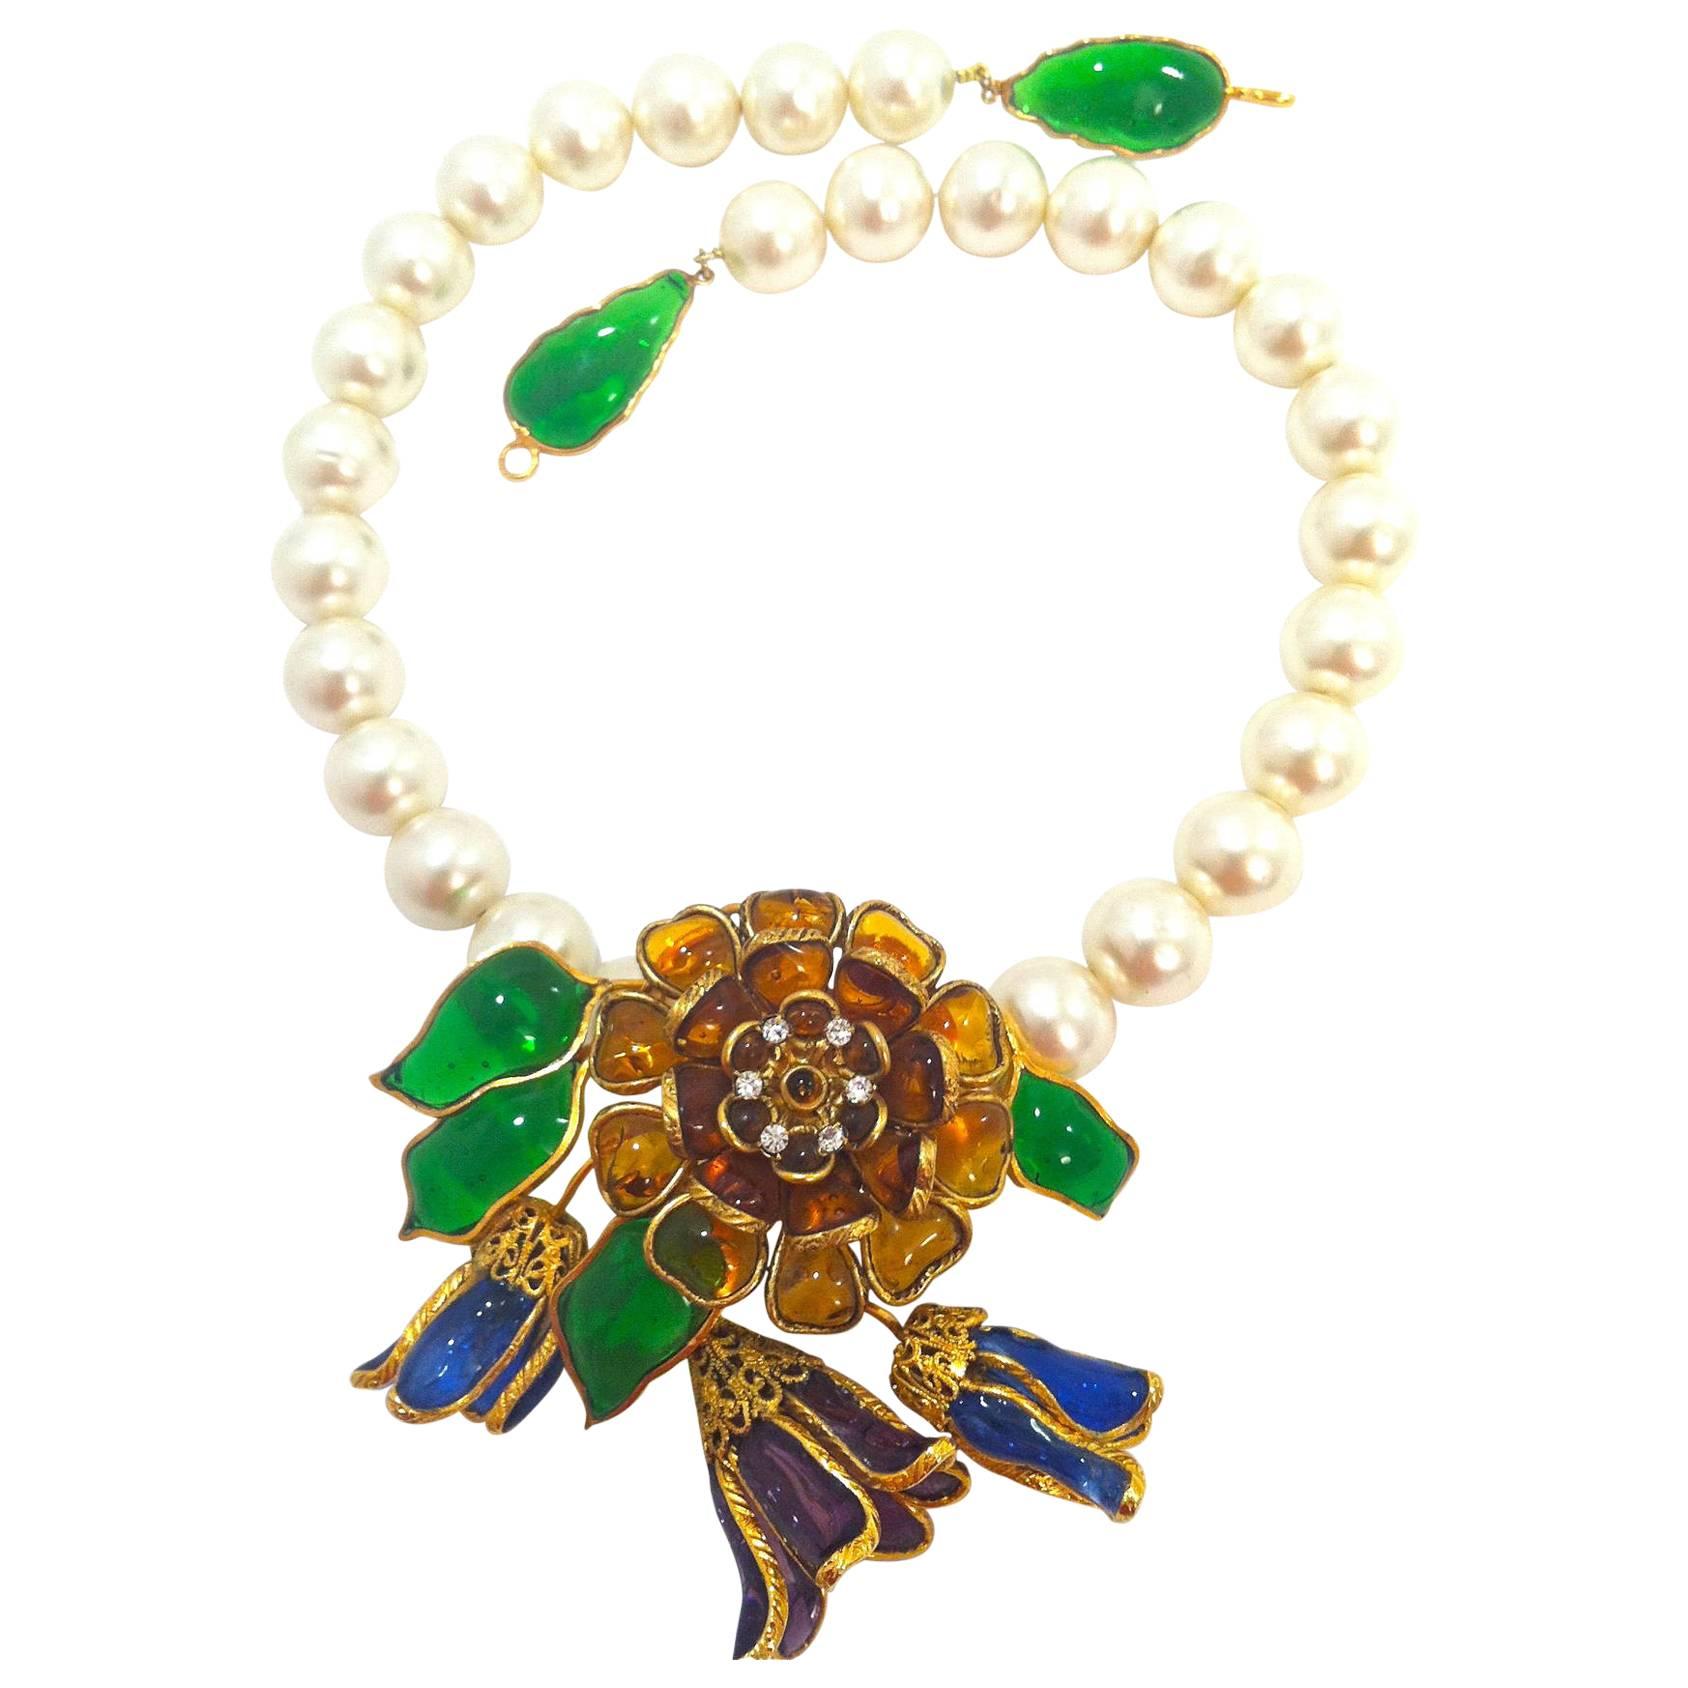 Rare 1960s Chanel Necklace by Maison Gripoix